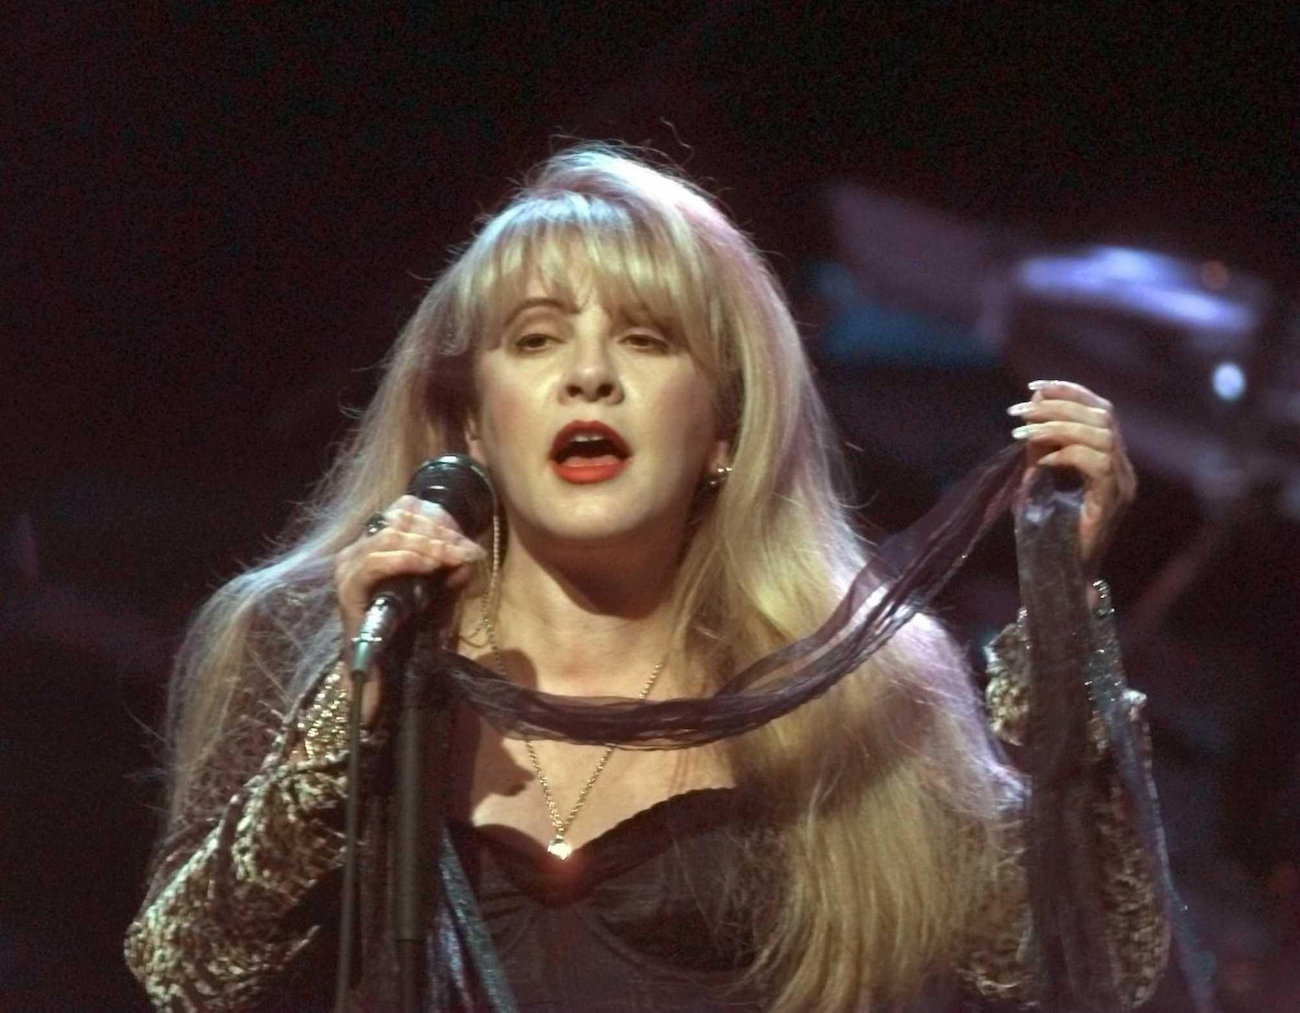 Stevie Nicks performing with Fleetwood Mac in New York, 1997.